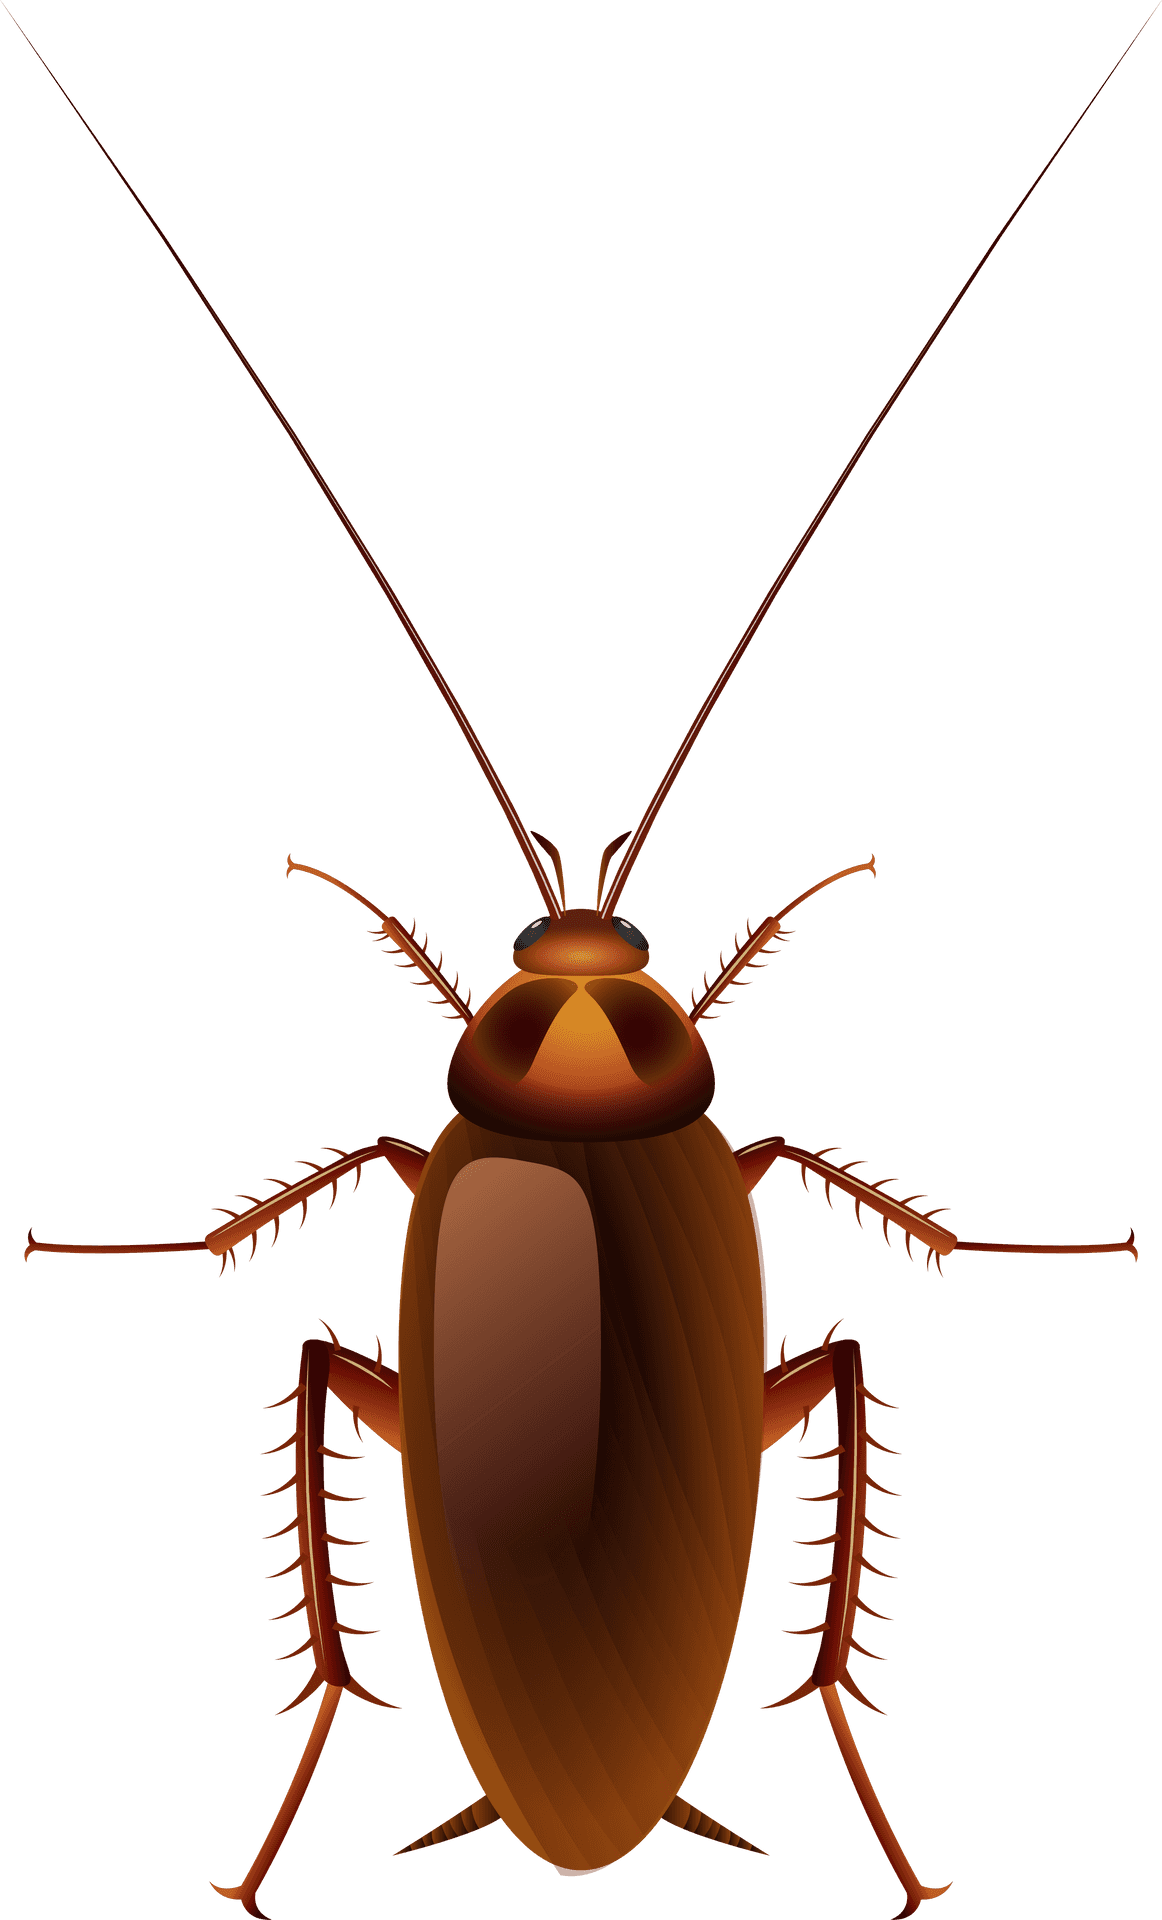 Detailed Cockroach Illustration PNG